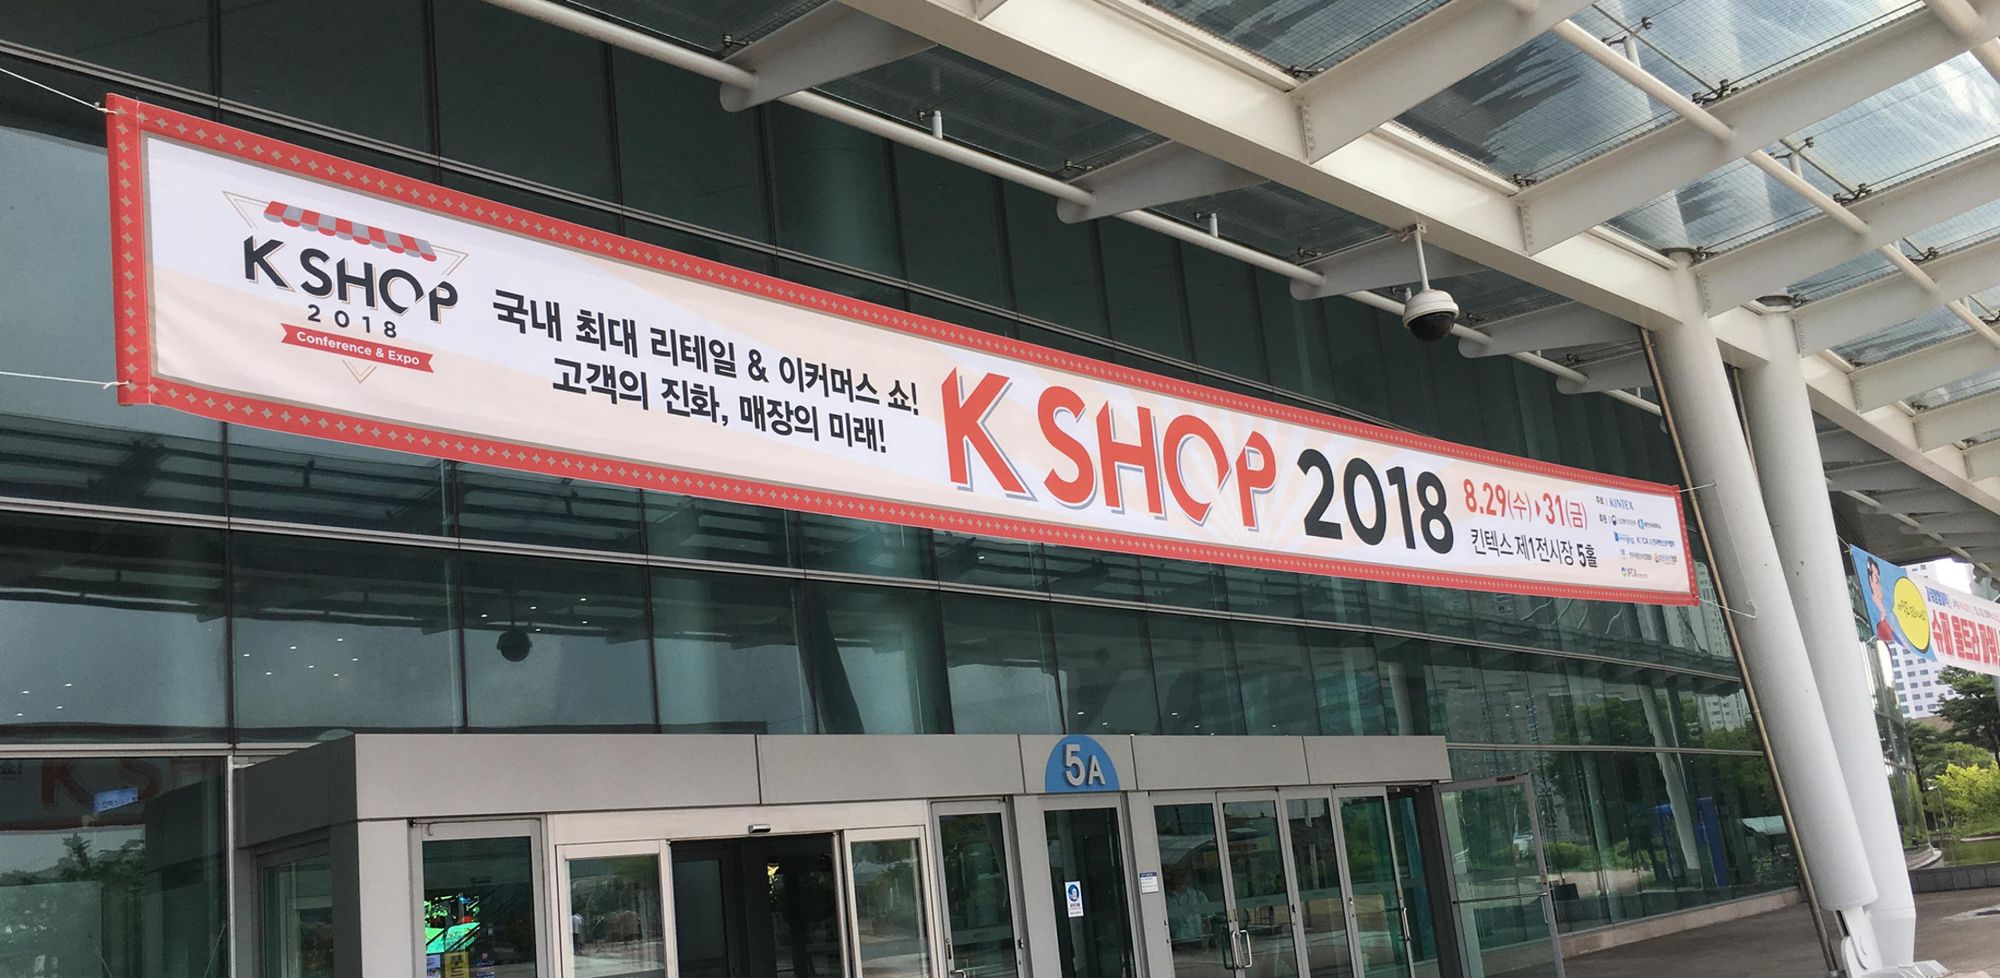 K SHOP 2018 컨퍼런스 참석 후기